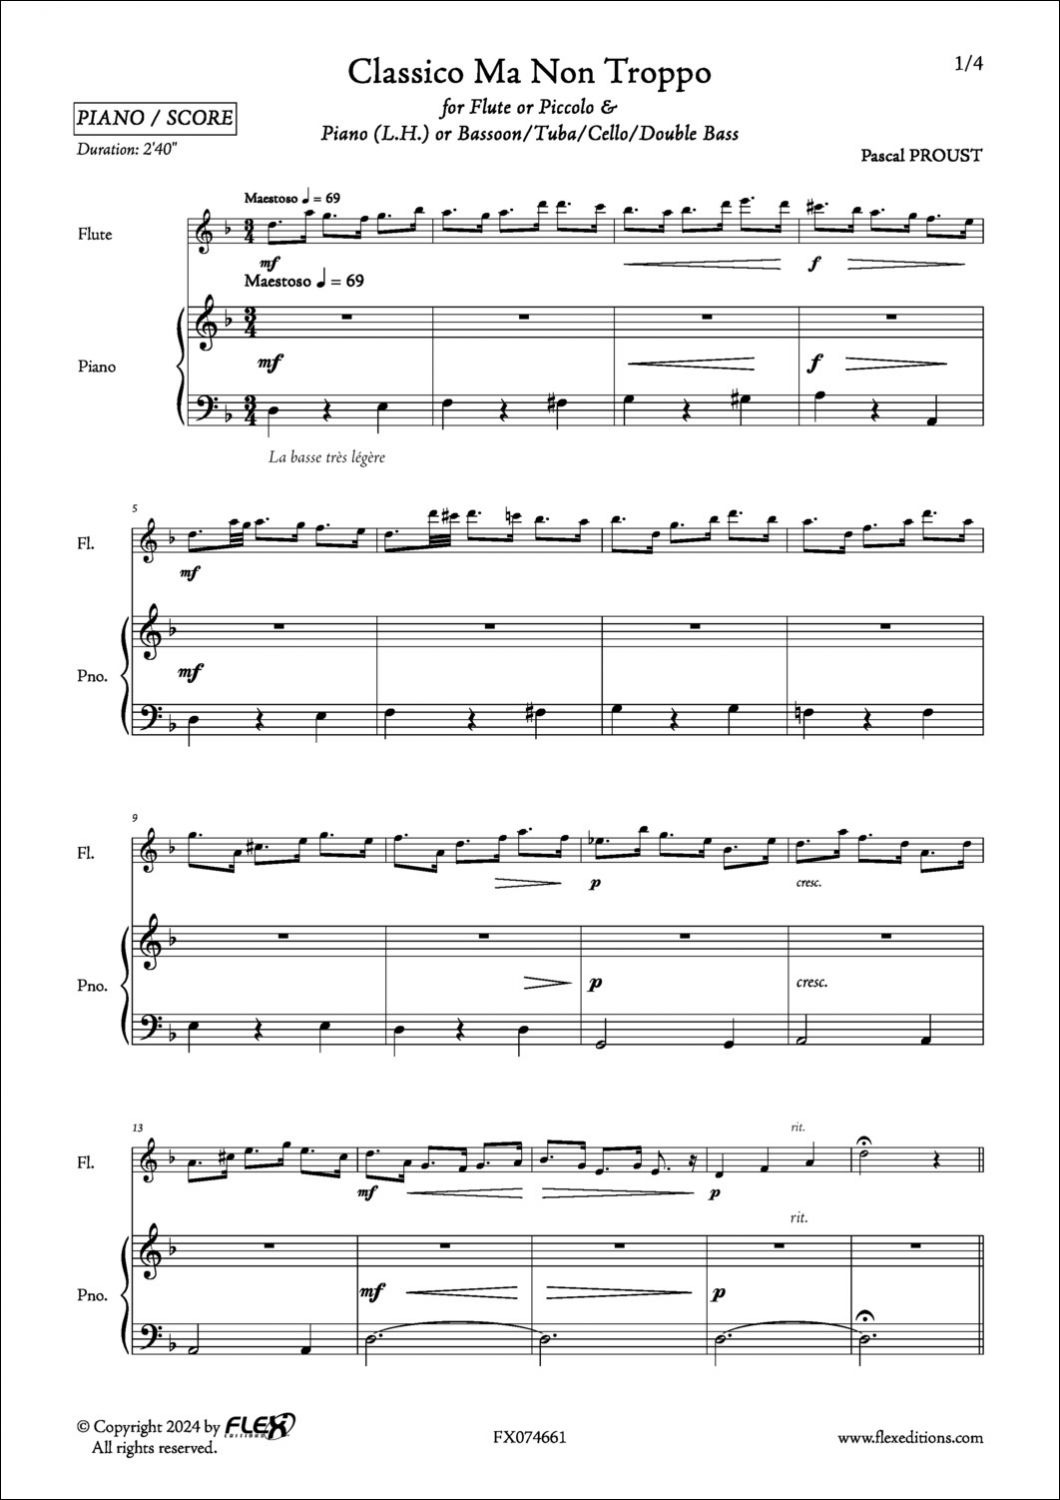 Classico Ma Non Troppo - P. PROUST - <font color=#666666>Flute/Piccolo and Piano Lef Hand or Bassoon or Tuba or Cello or Double Bass (opt.)</font>